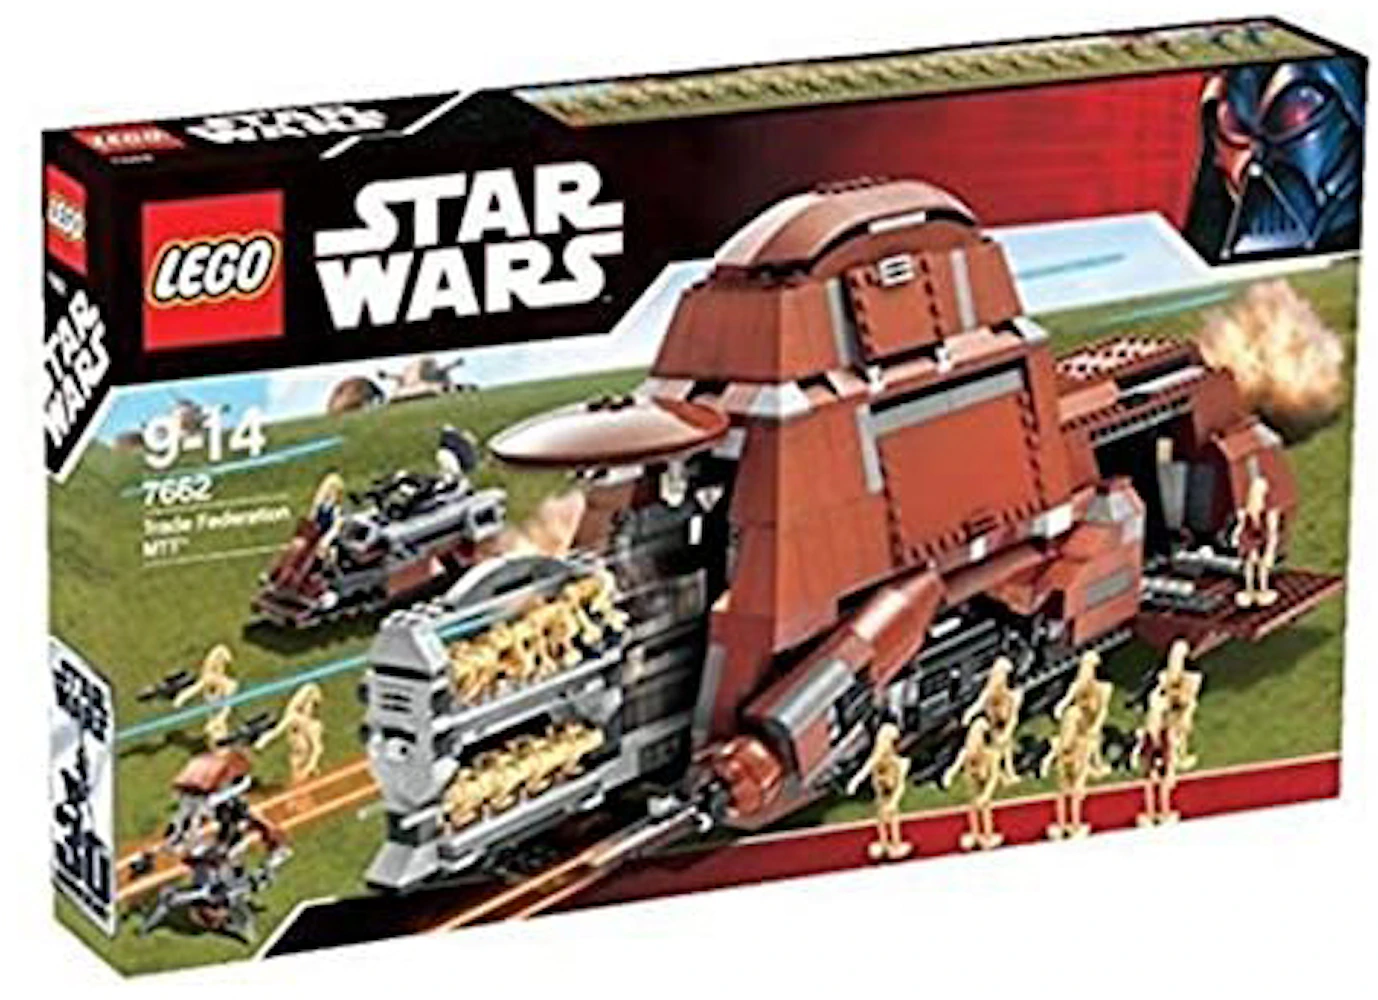 LEGO Star Wars Trade Federation Set 7662 Brown - SS07 - US